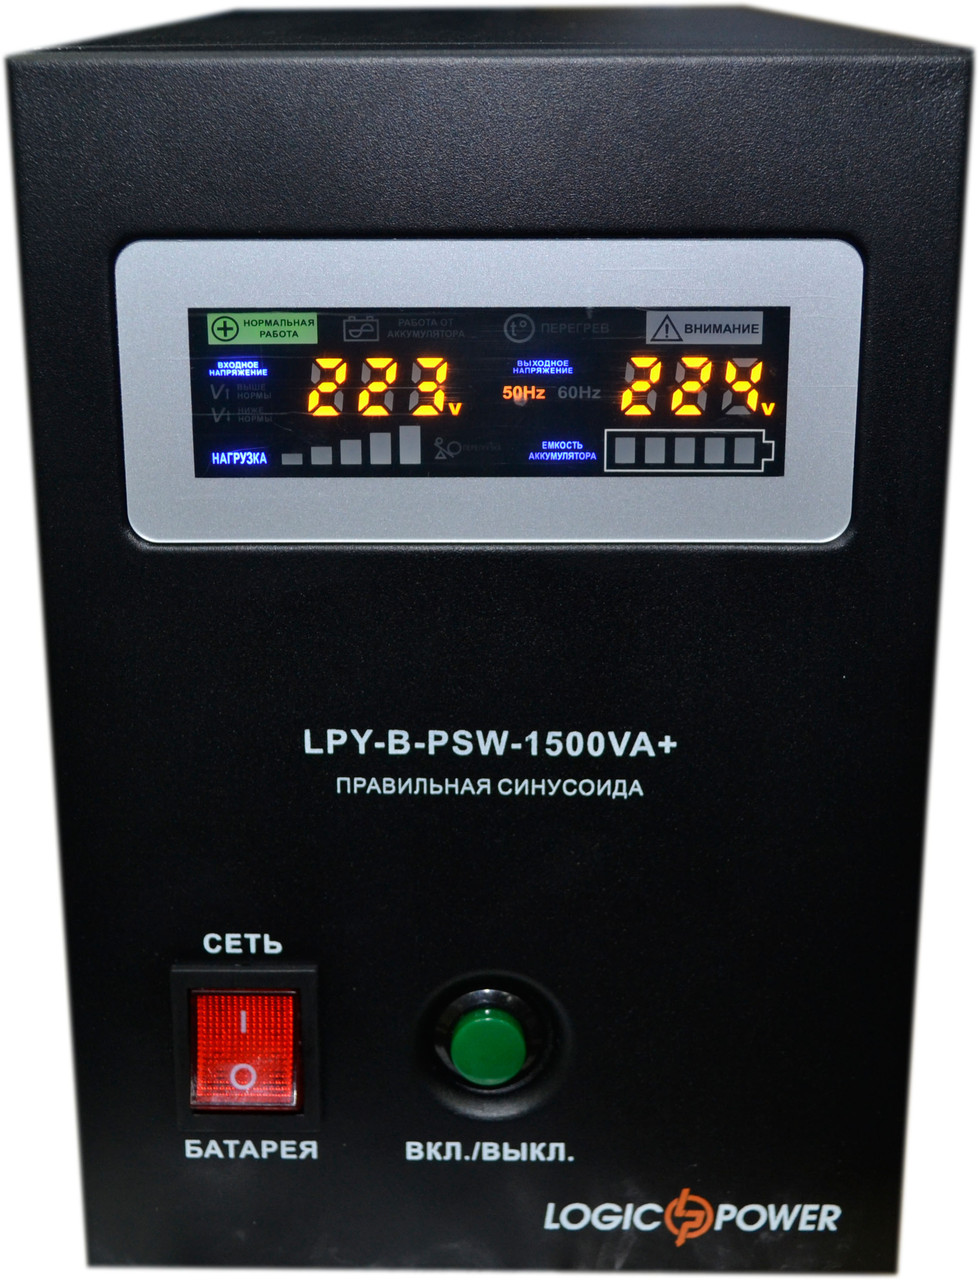 Logicpower LPY-B-PSW-1500+ 24v, фото 1